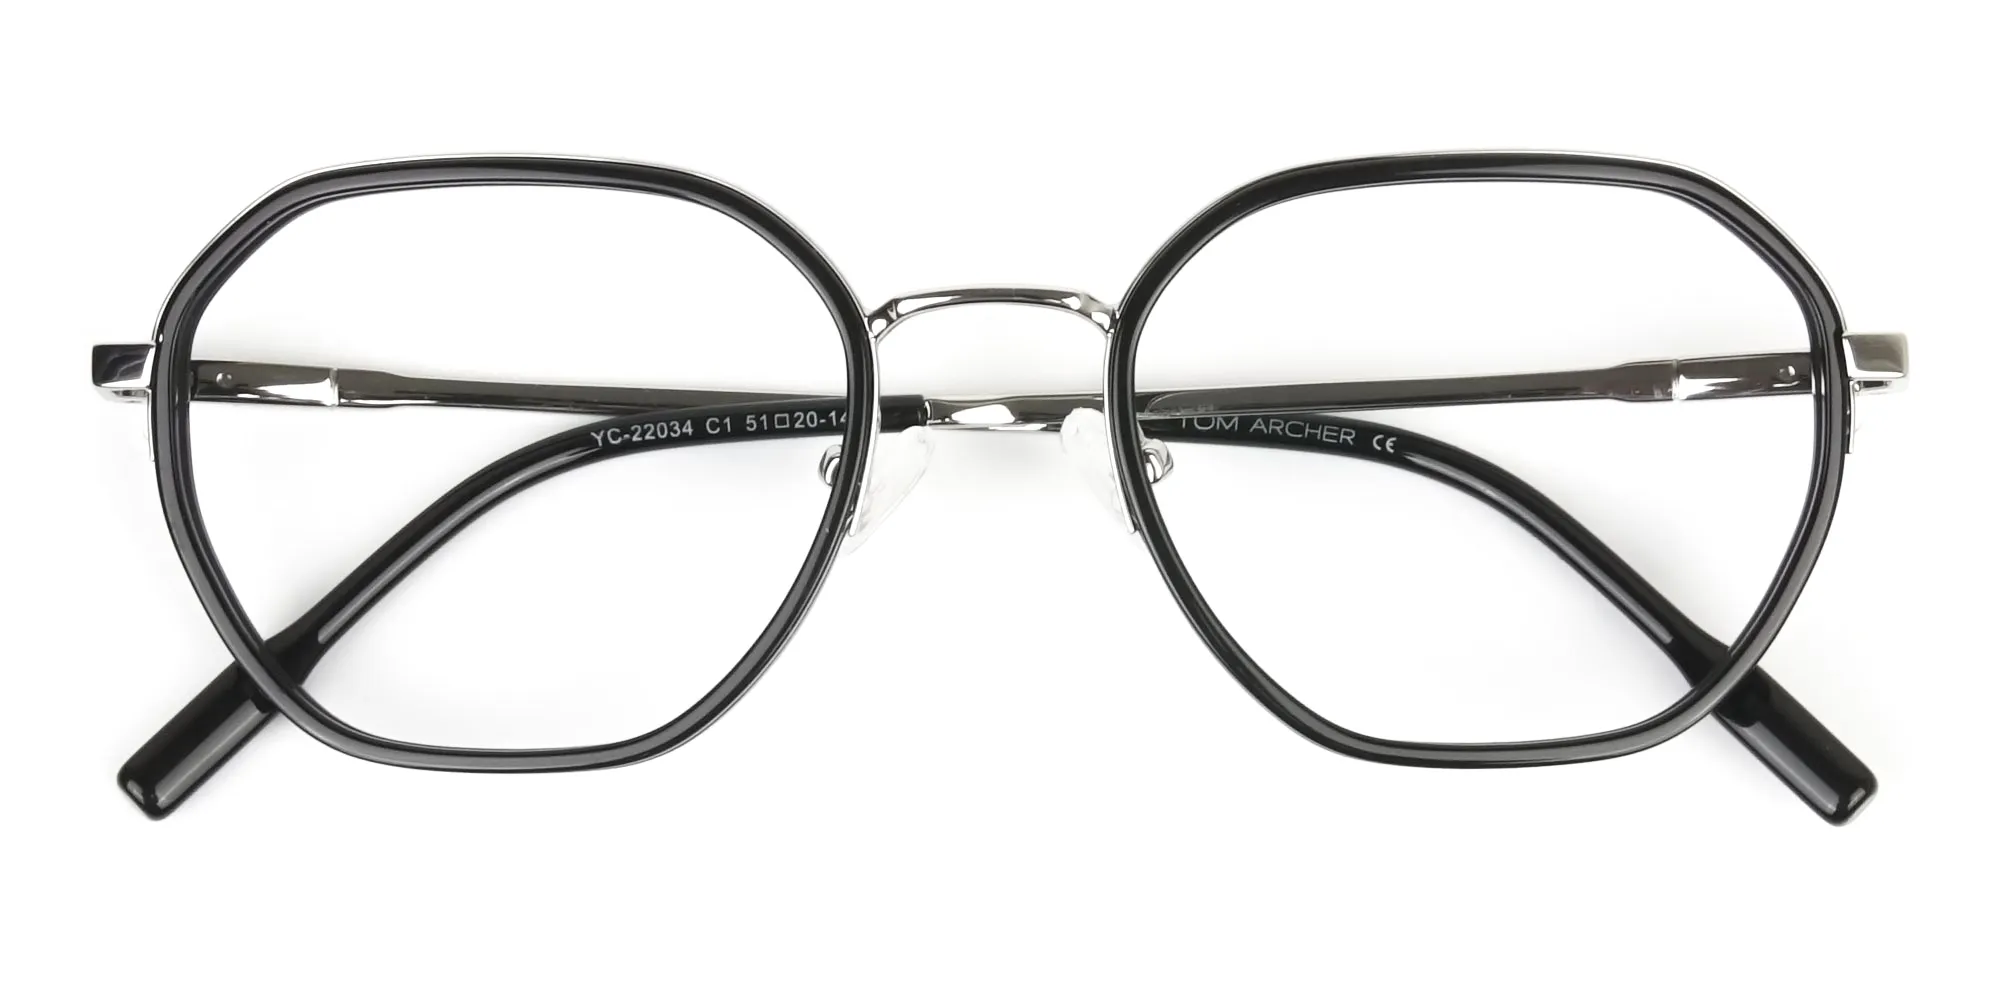 Square Black and Silver Geometric Glasses - 2